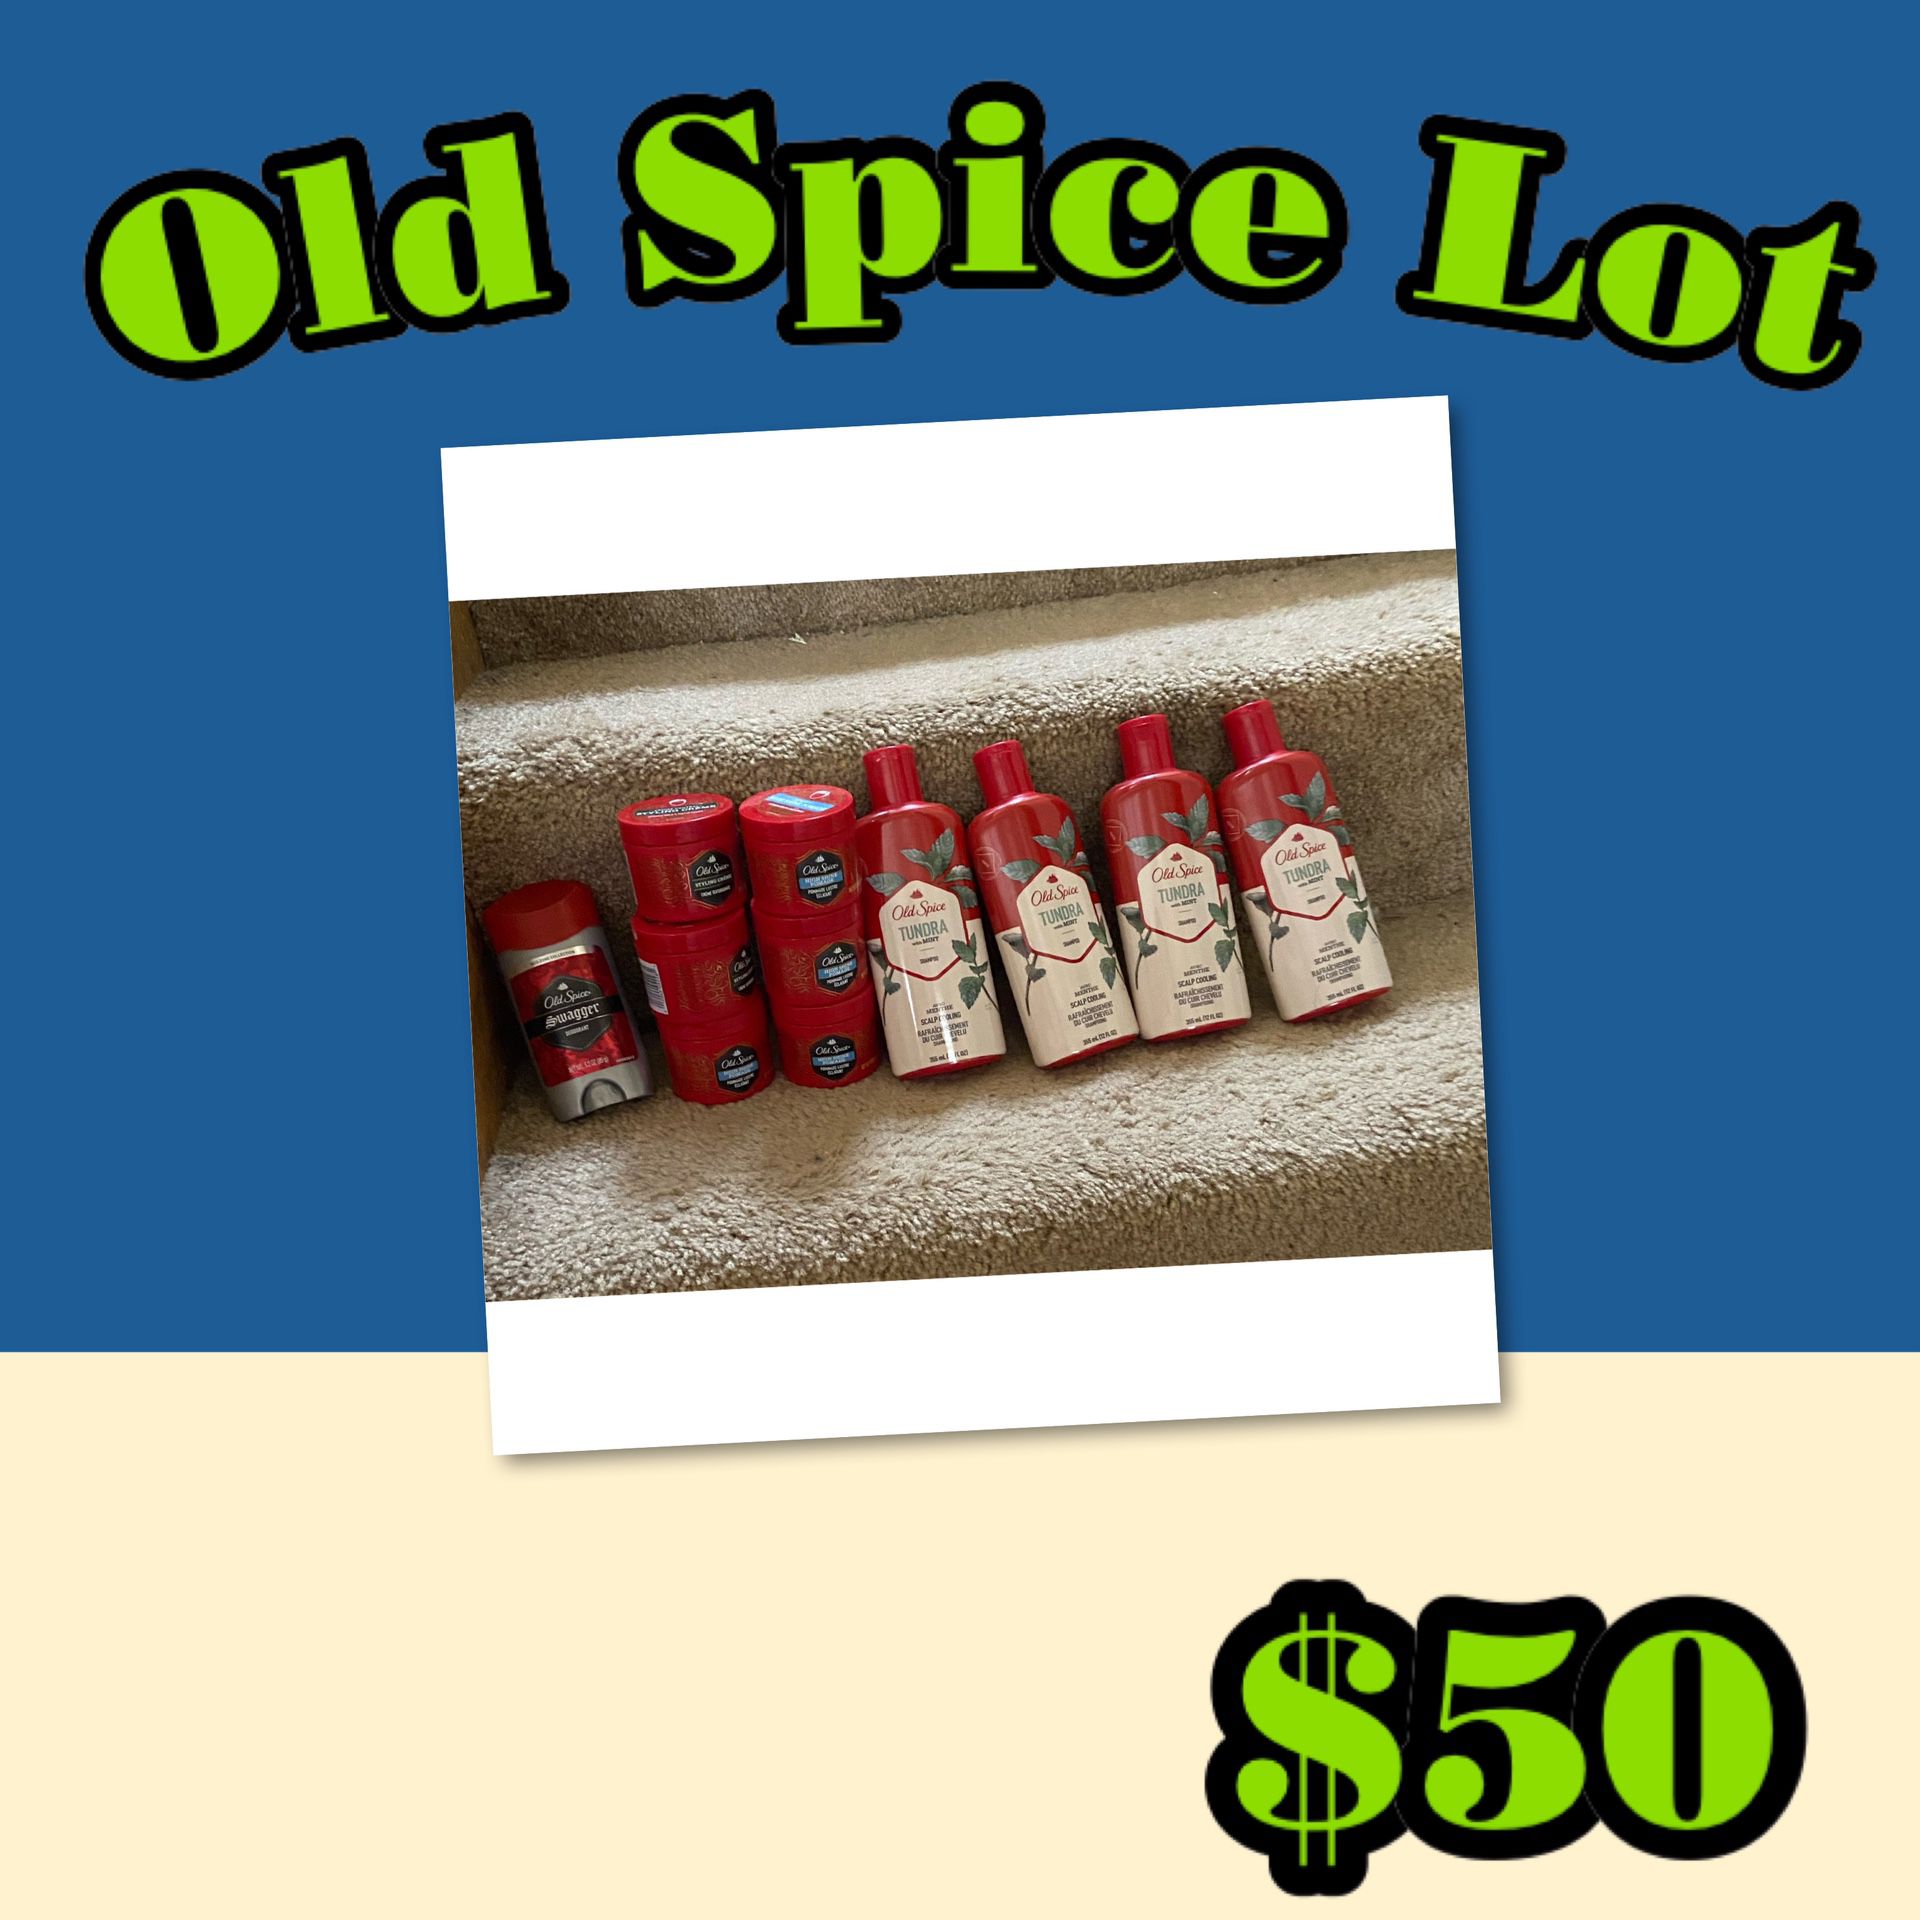 Old spice bundle